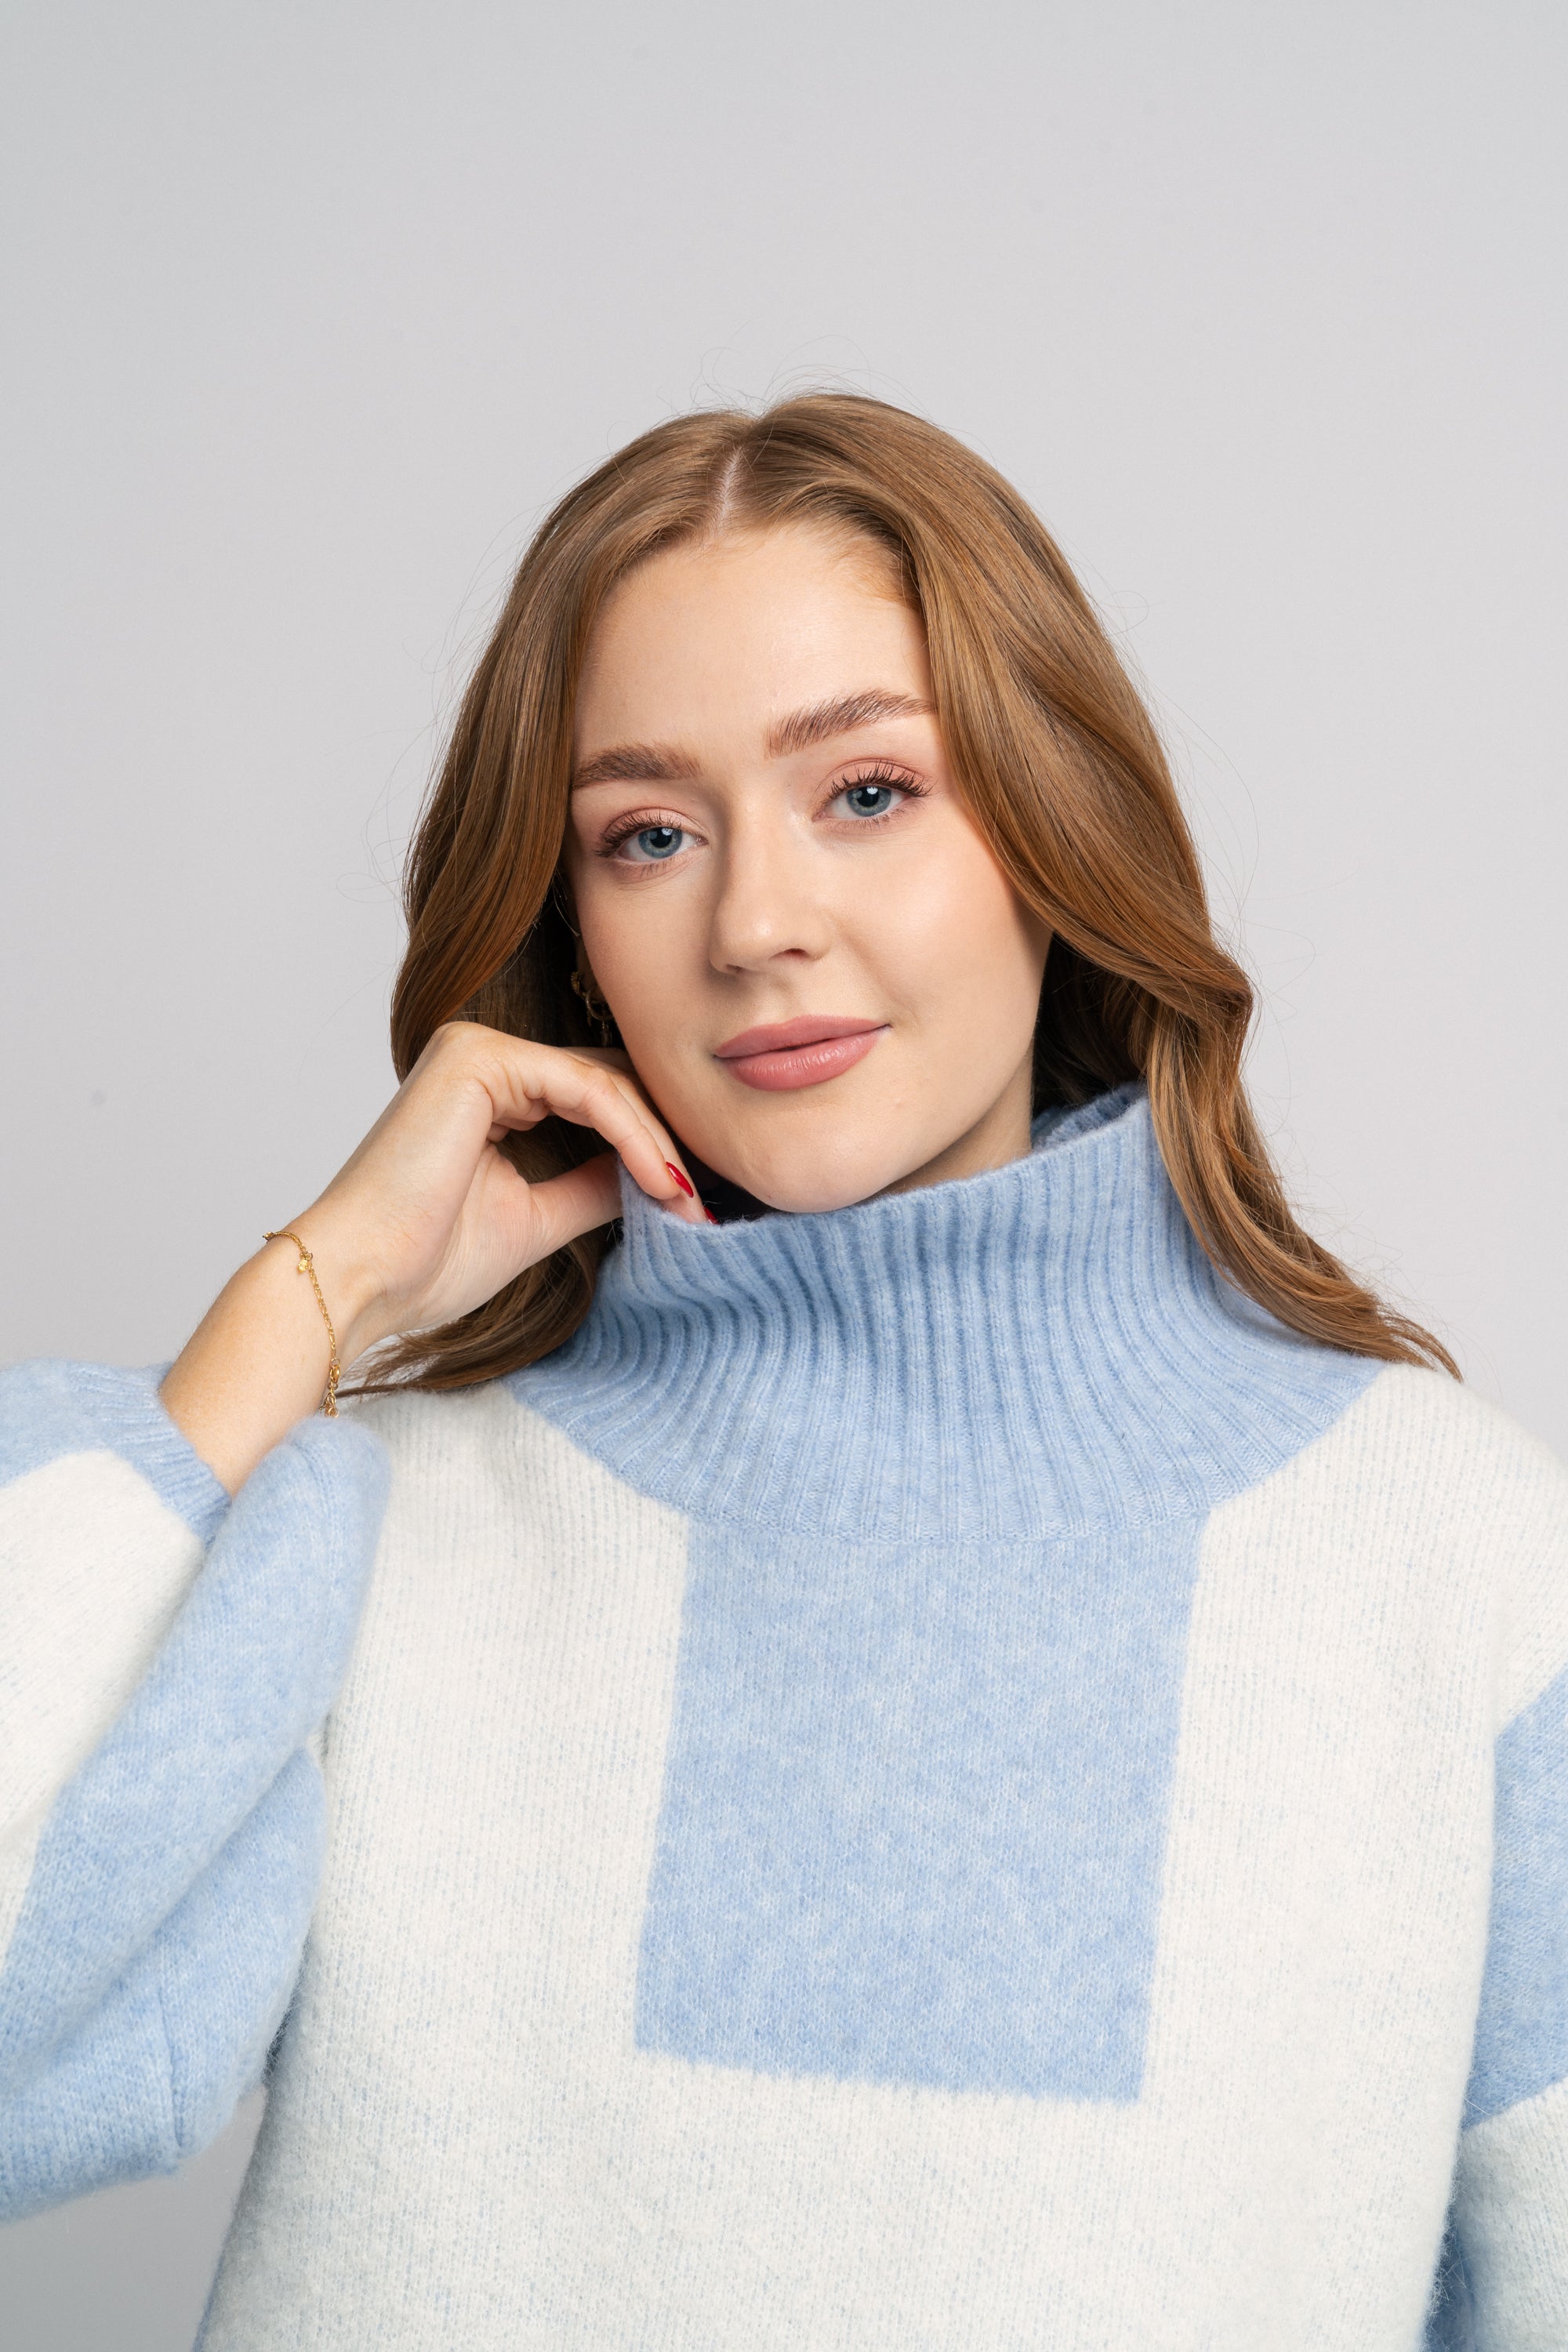 Isa Sweater - Light Blue